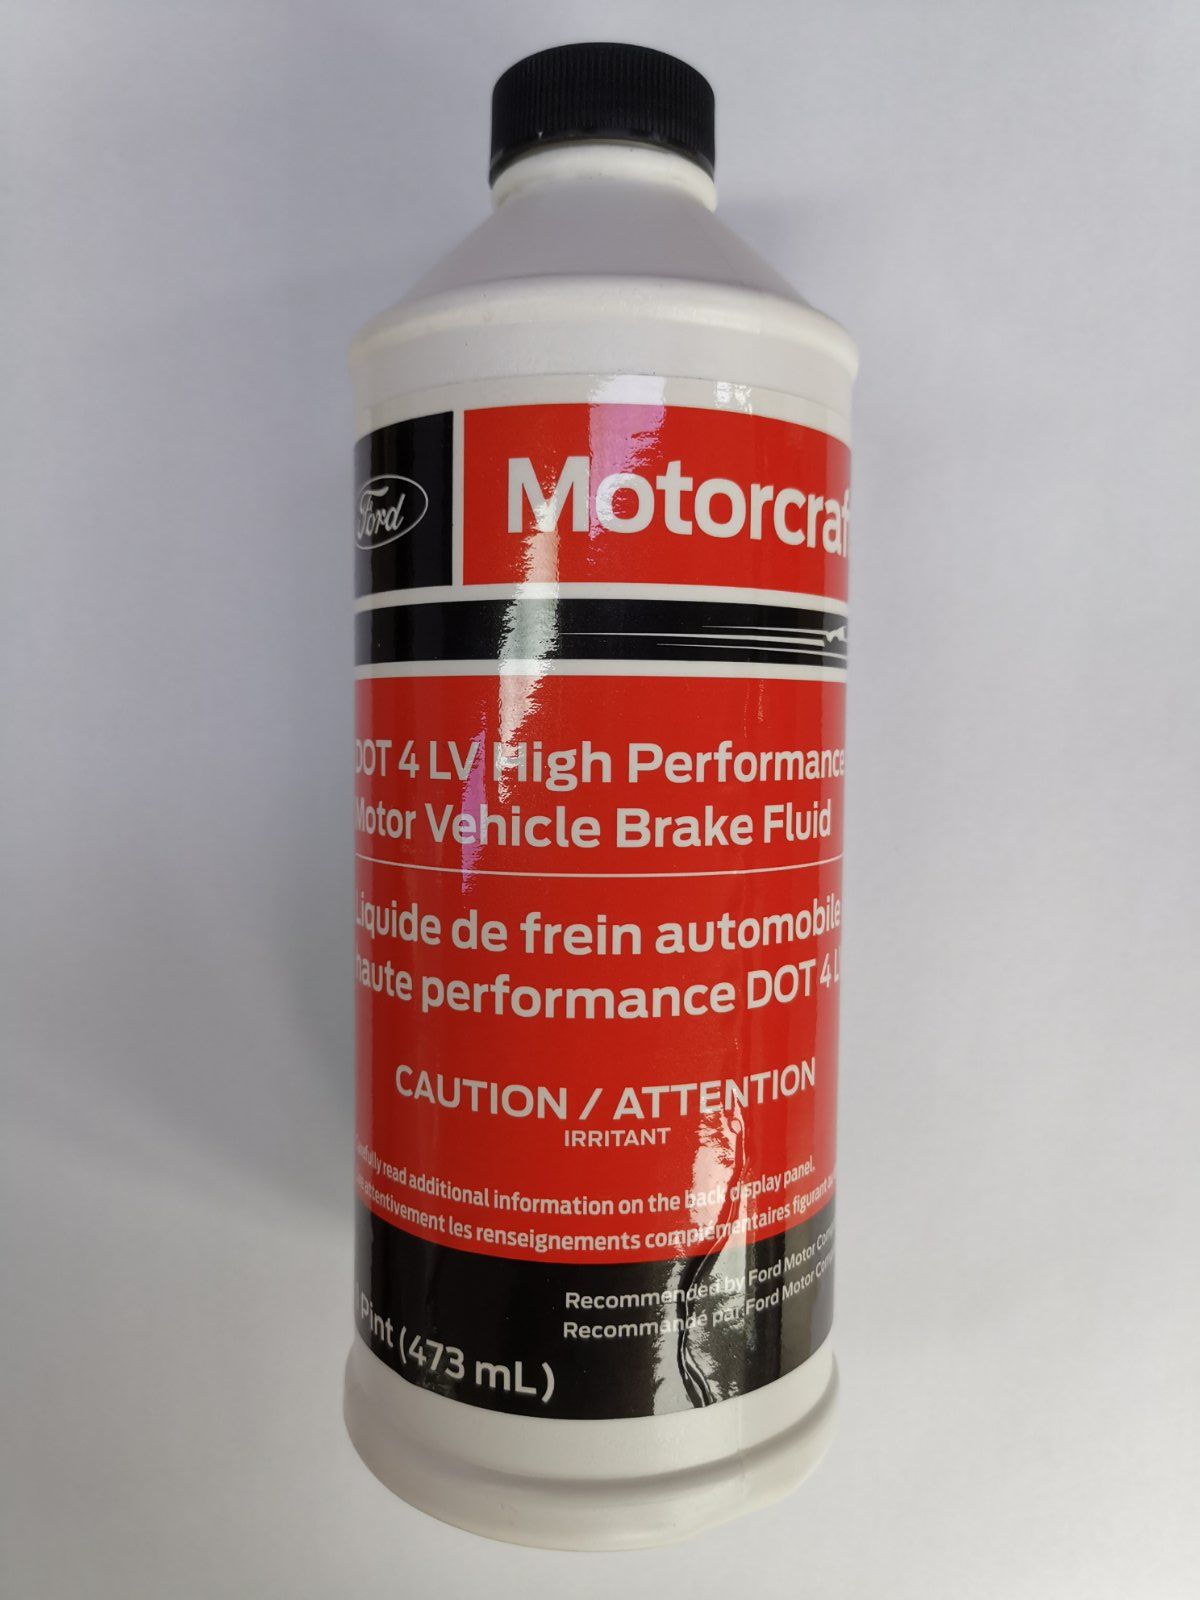 Motorcraft DOT 4 LV High Performance Motor Vehicle Brake Fluid 1